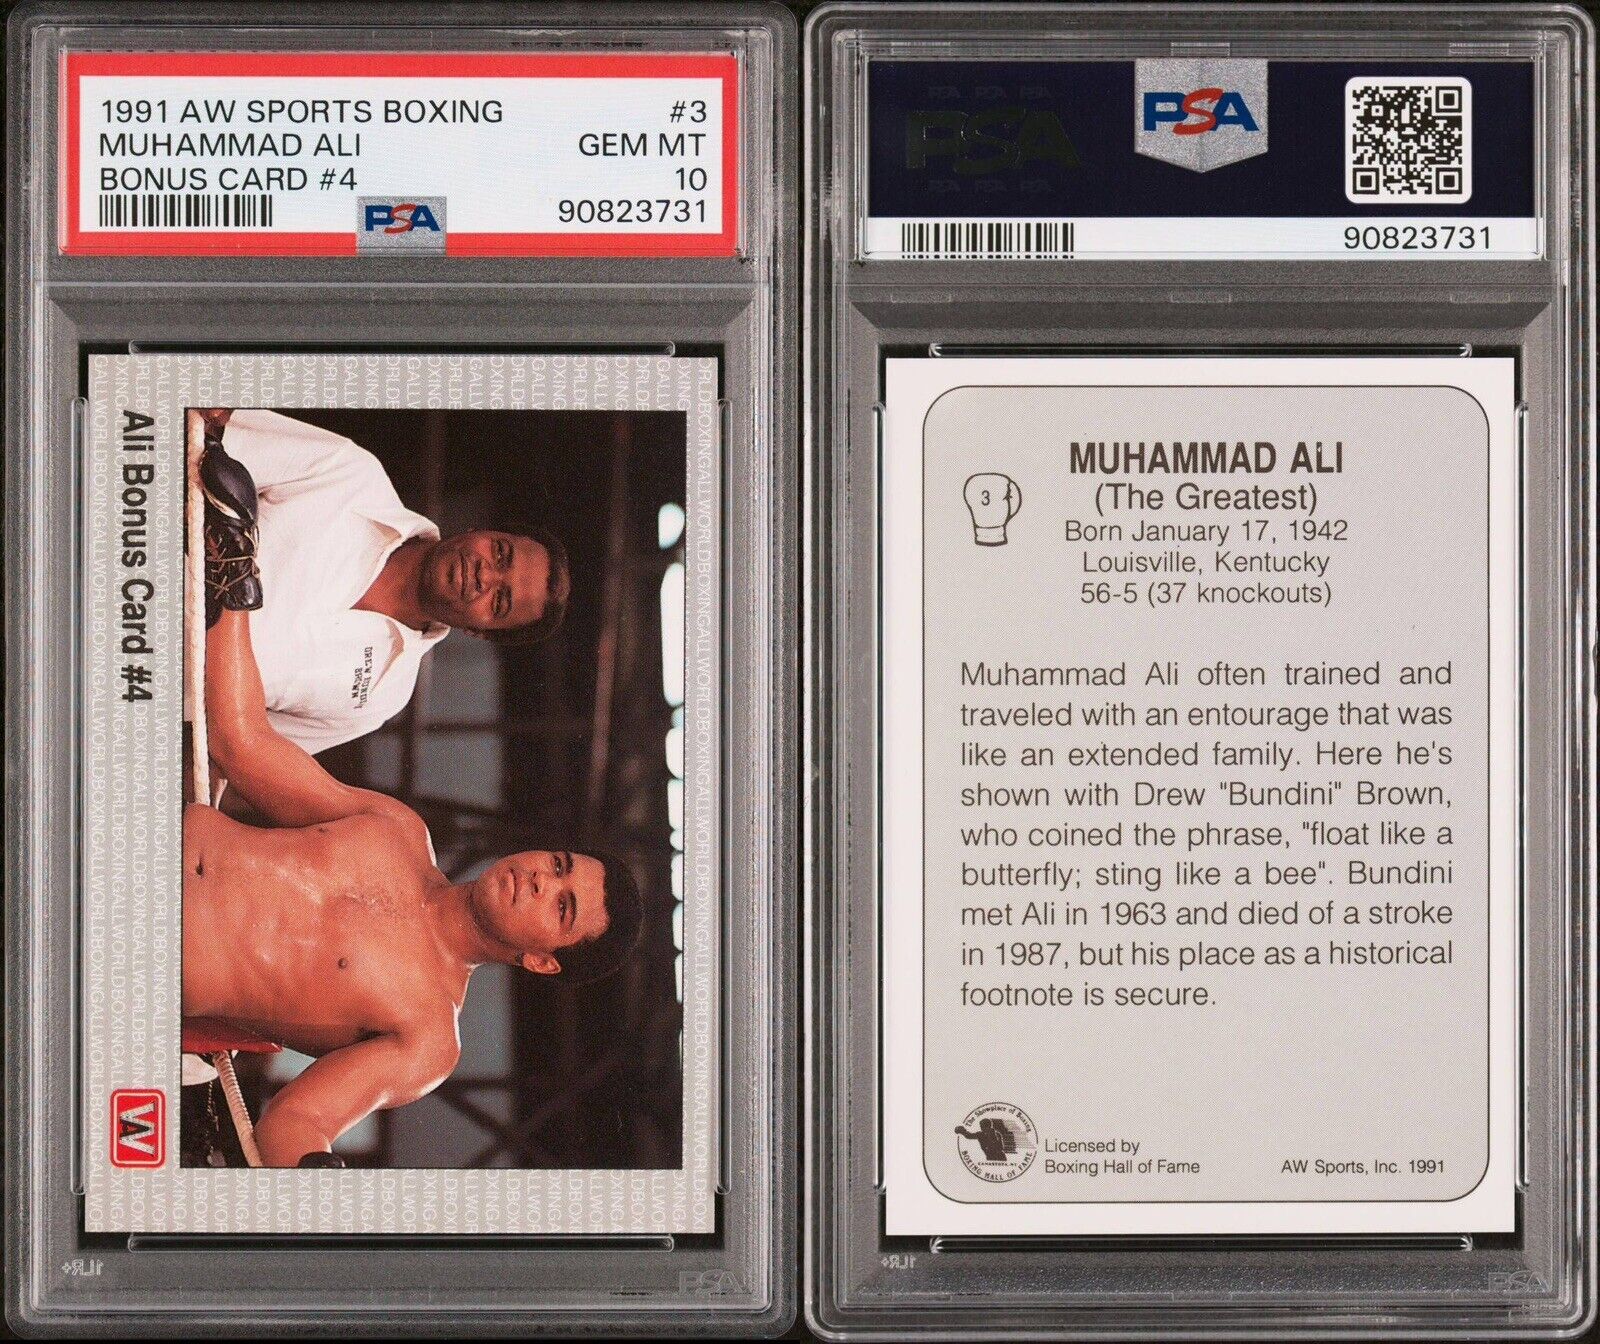 1991 AW Boxing Muhammad Ali Bonus Card #4 PSA 10. Low Pop Count